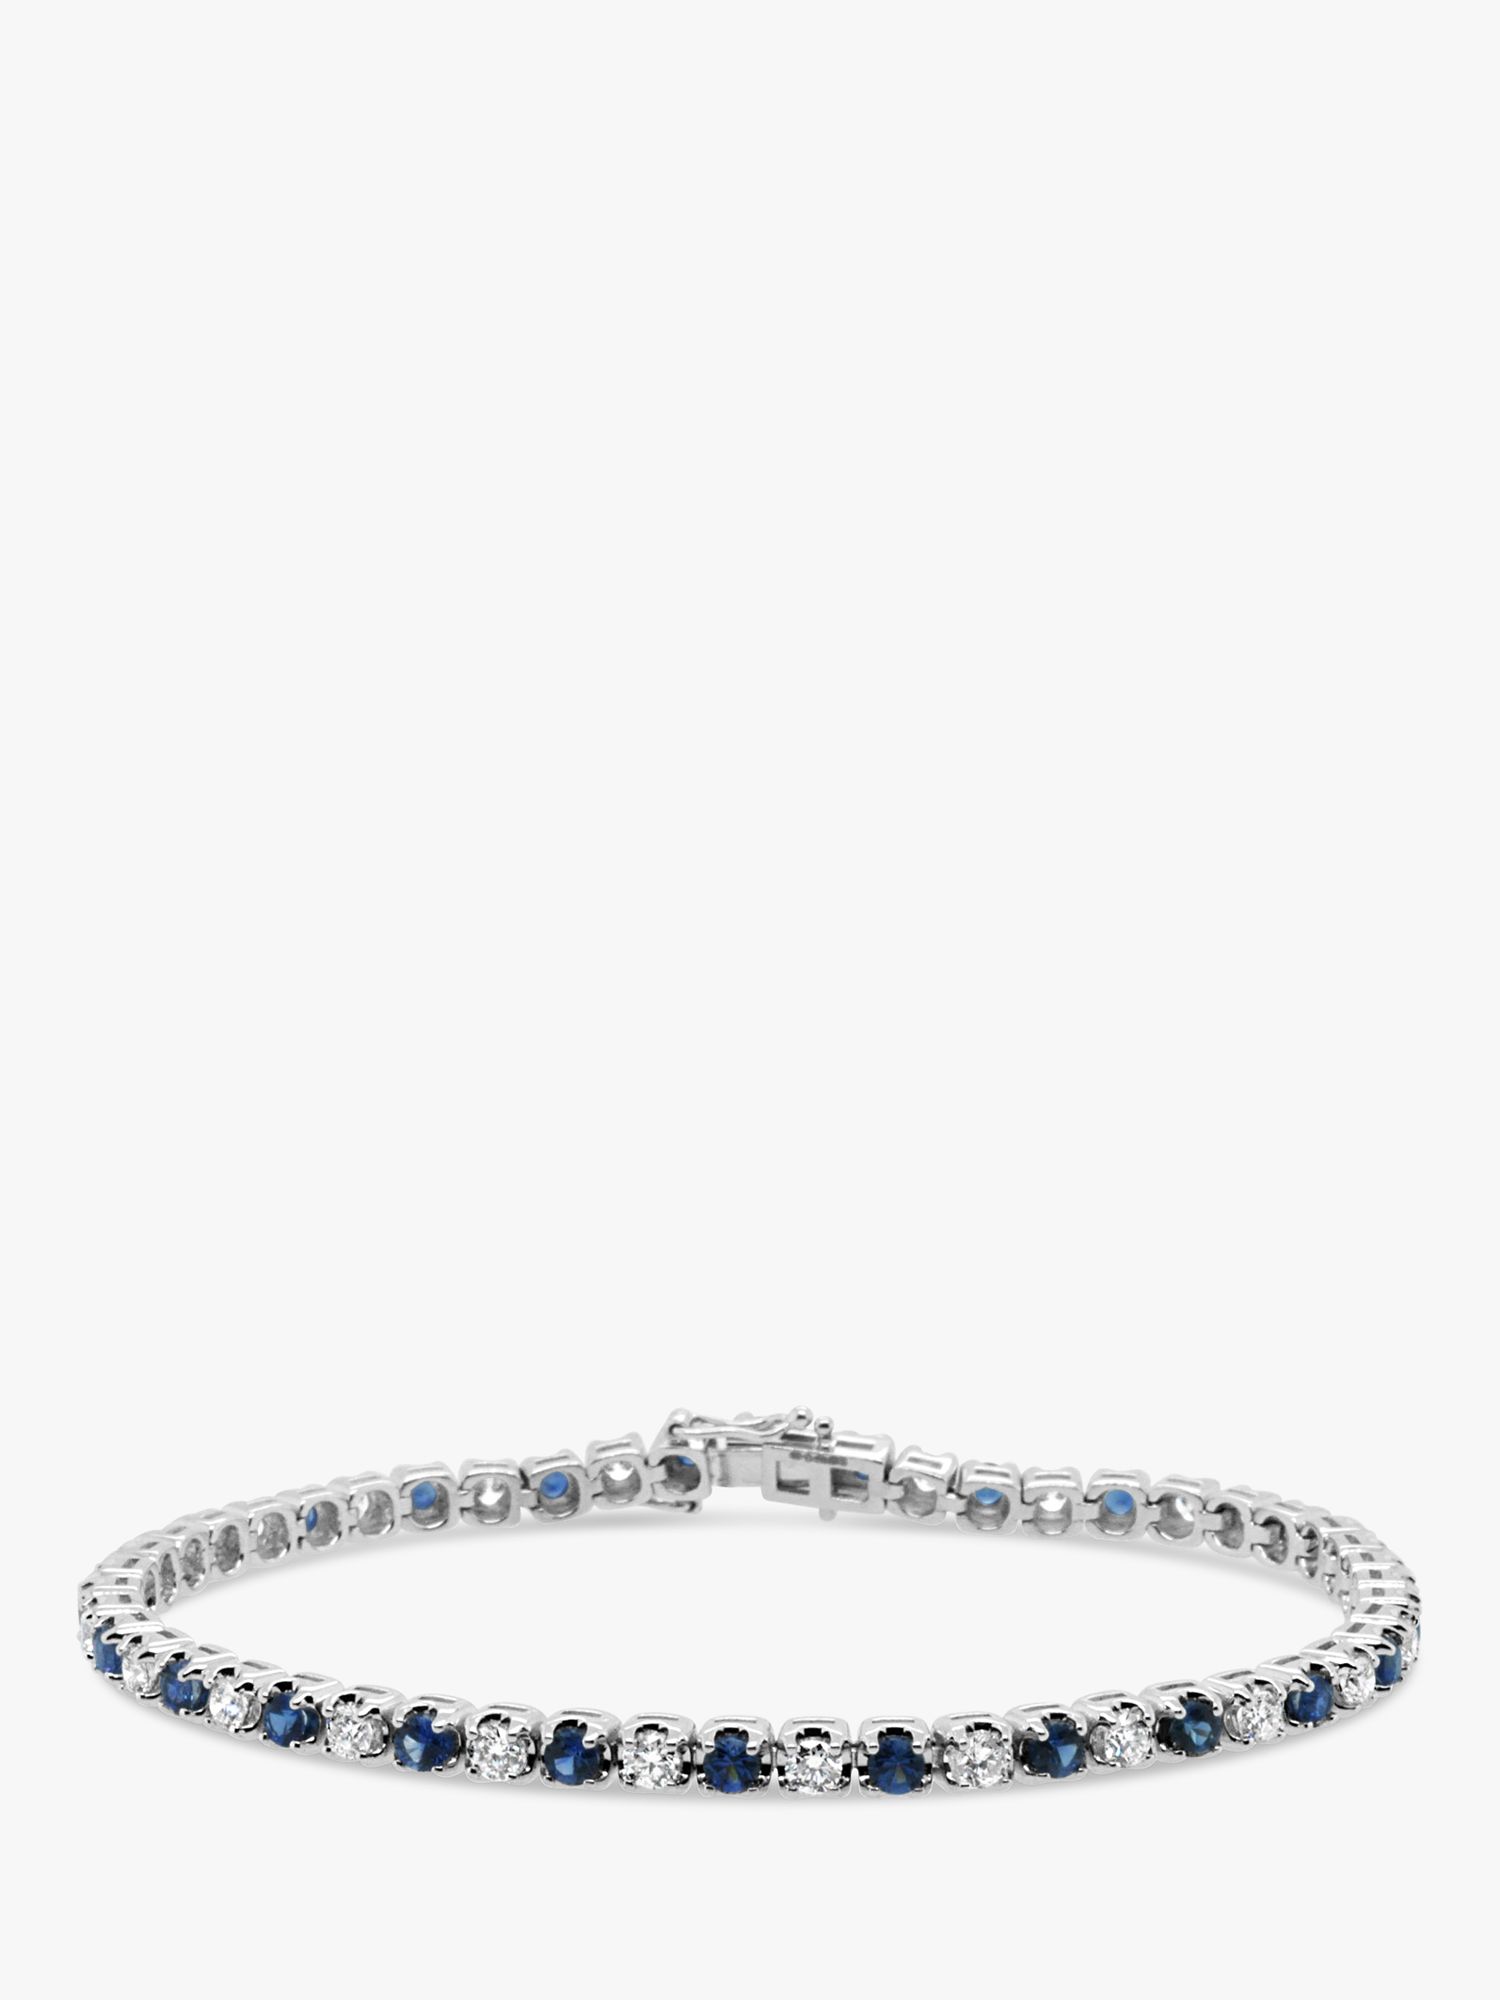 Milton & Humble Jewellery Second Hand 950 Platinum Diamond & Sapphire Tennis Bracelet, Dated 2018